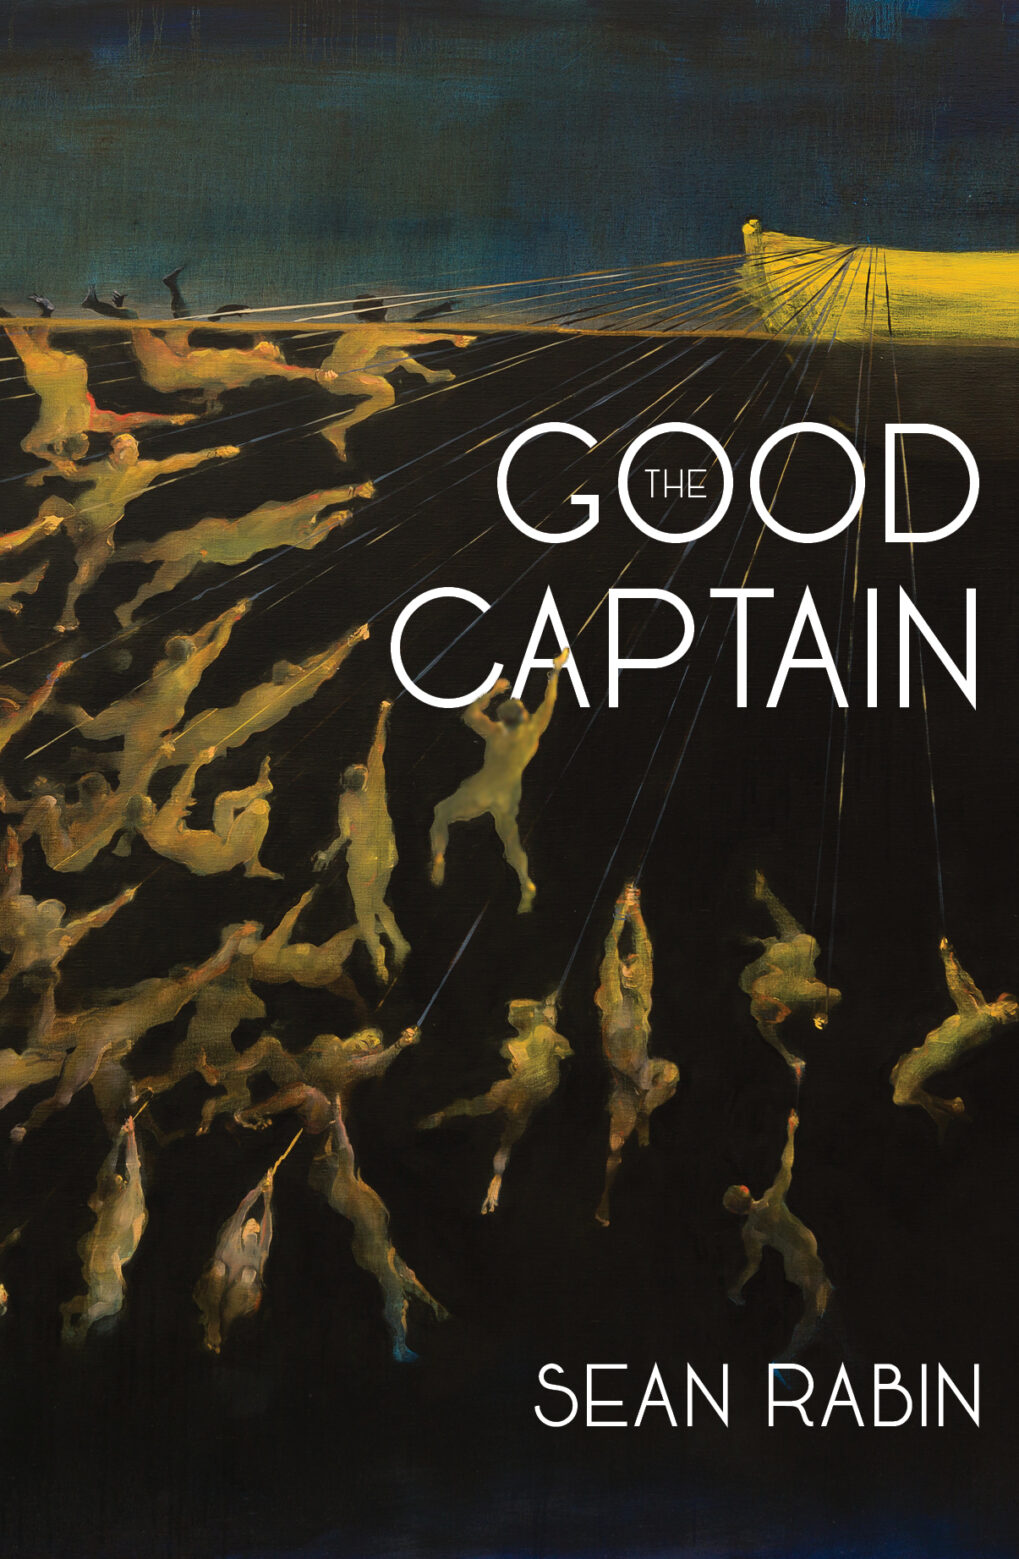 The Good Captain